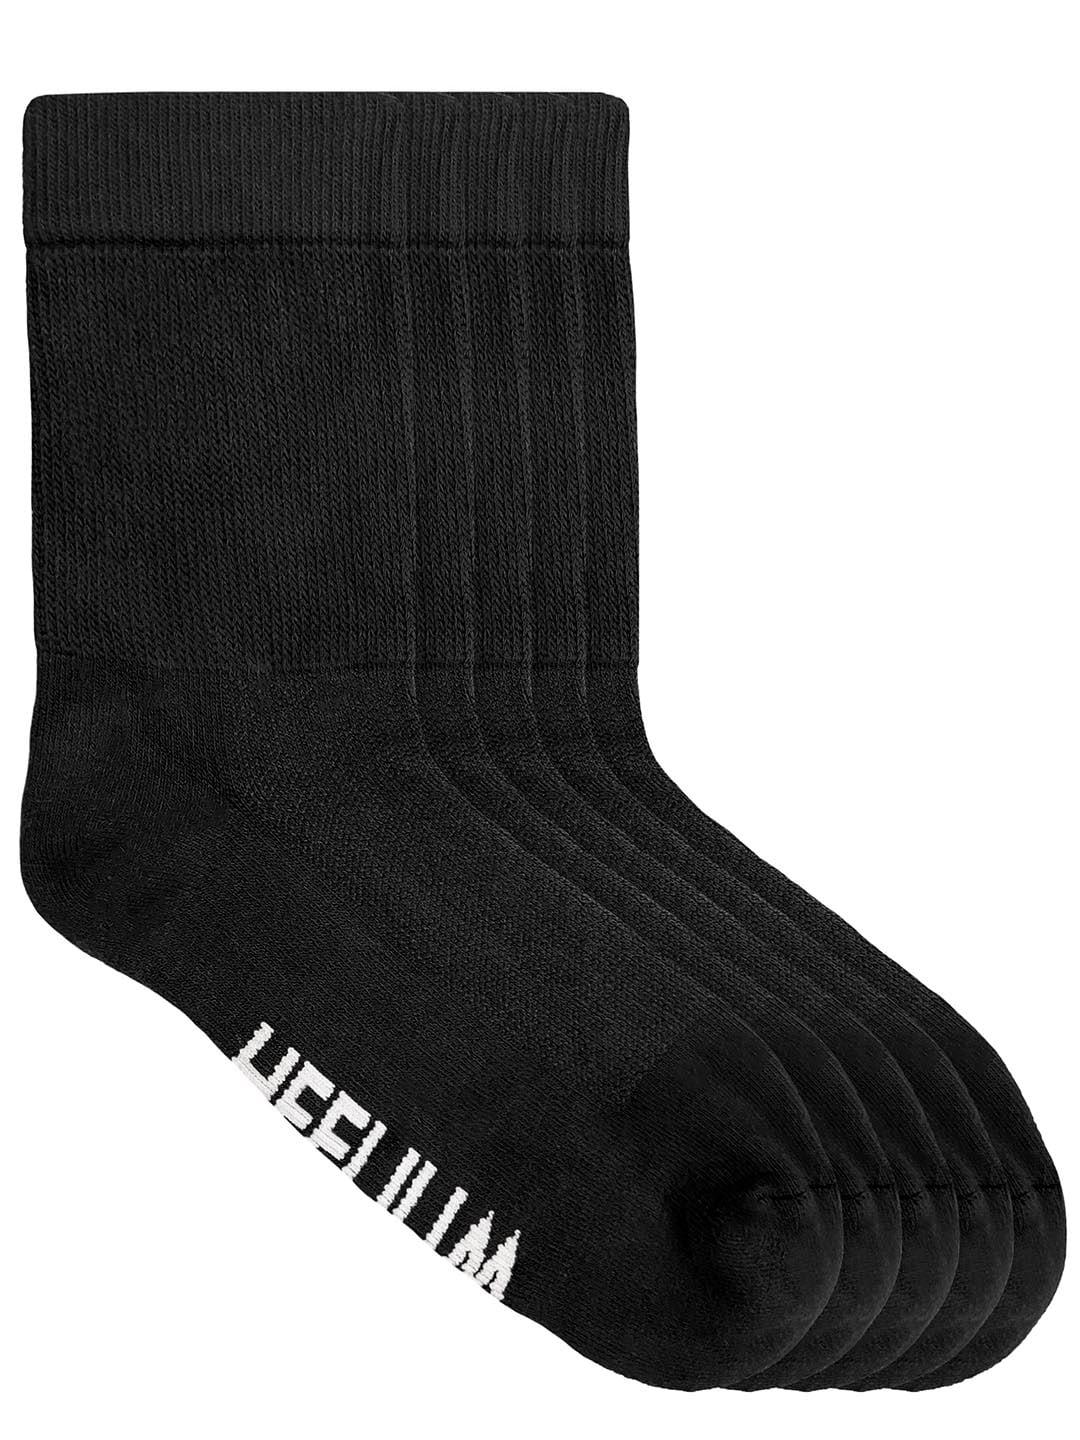 Heelium Unisex Black Pack of 5 Calf Length Socks